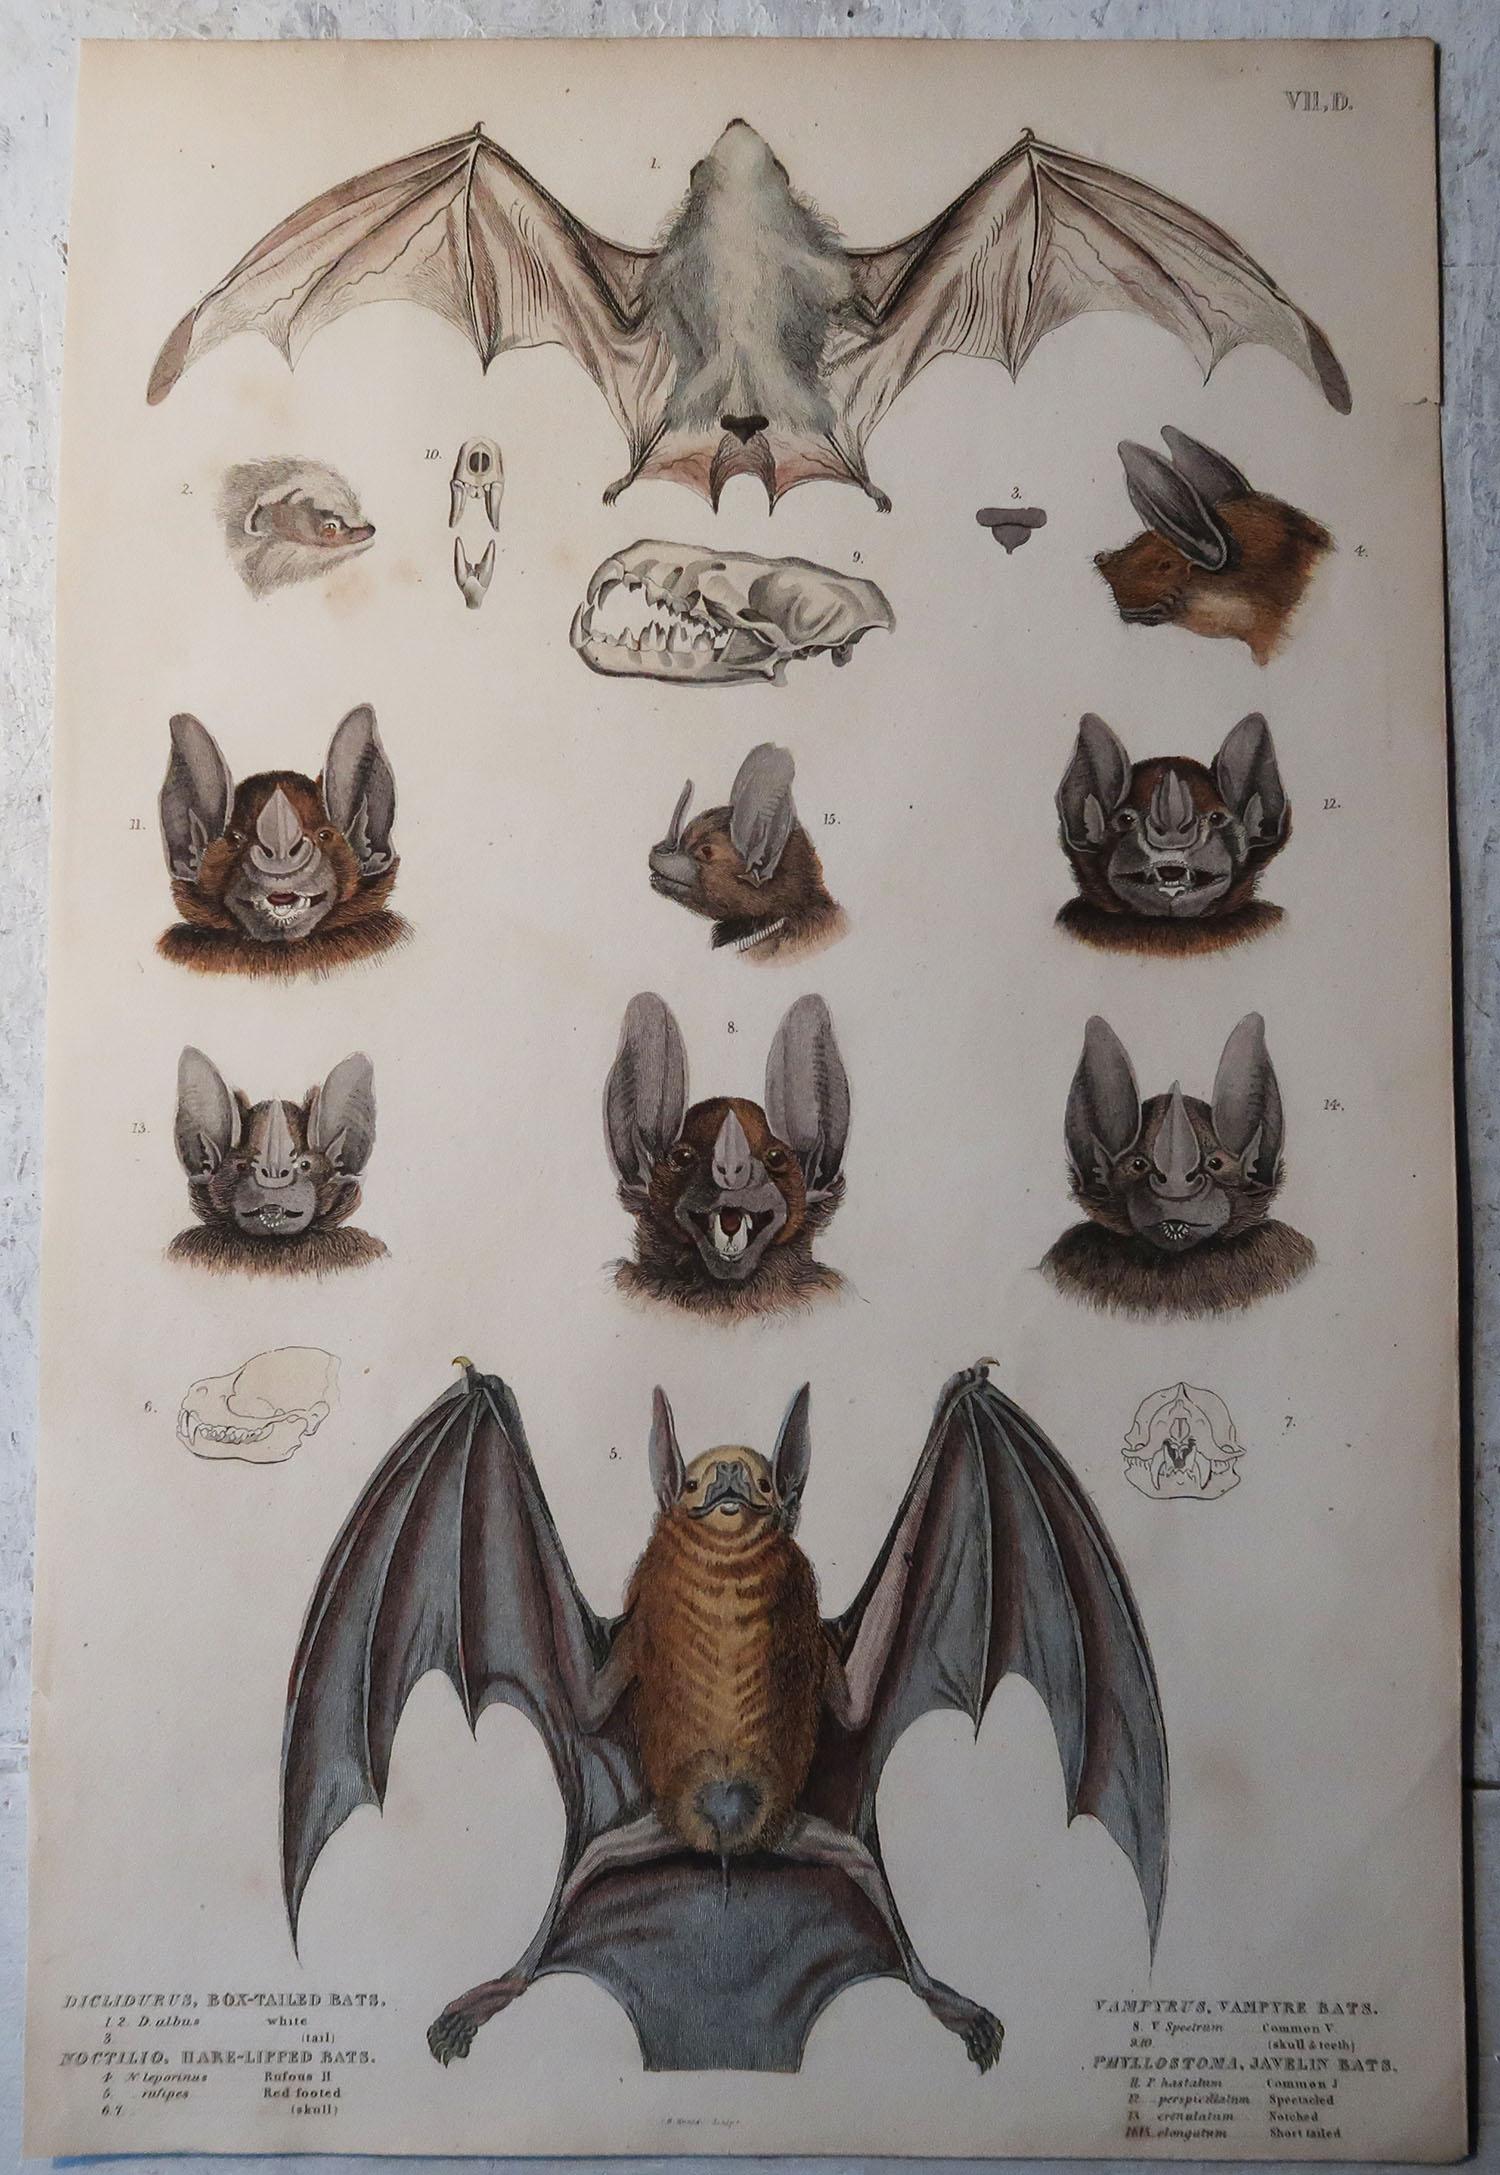 Other Set of 4 Large Original Antique Natural History Prints, Bats, circa 1835